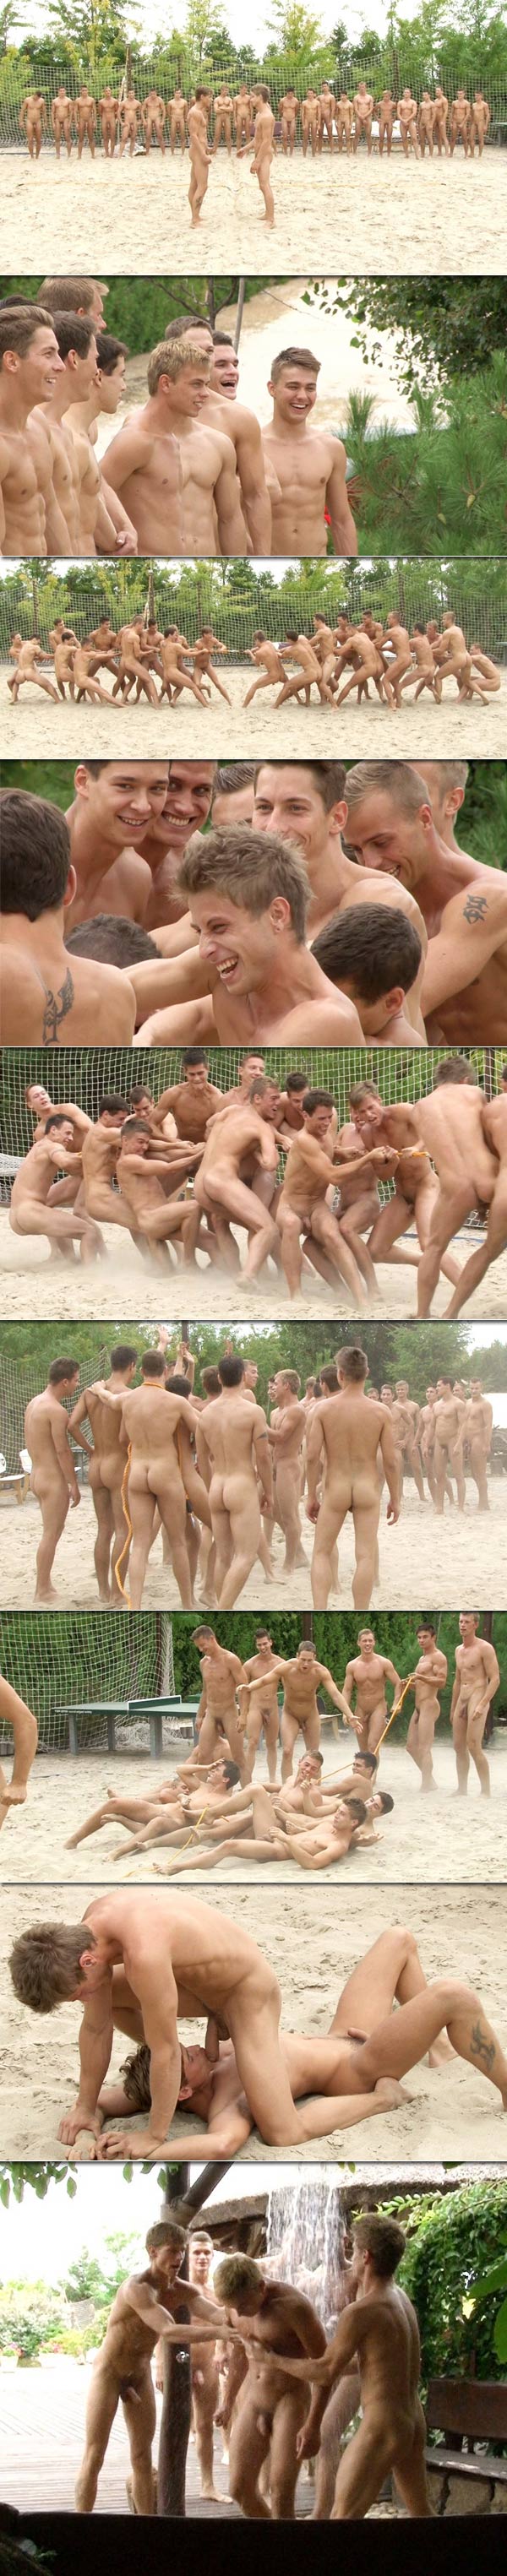 Orgy (24 Boys In Action) (Bareback) at BelAmiOnline.com